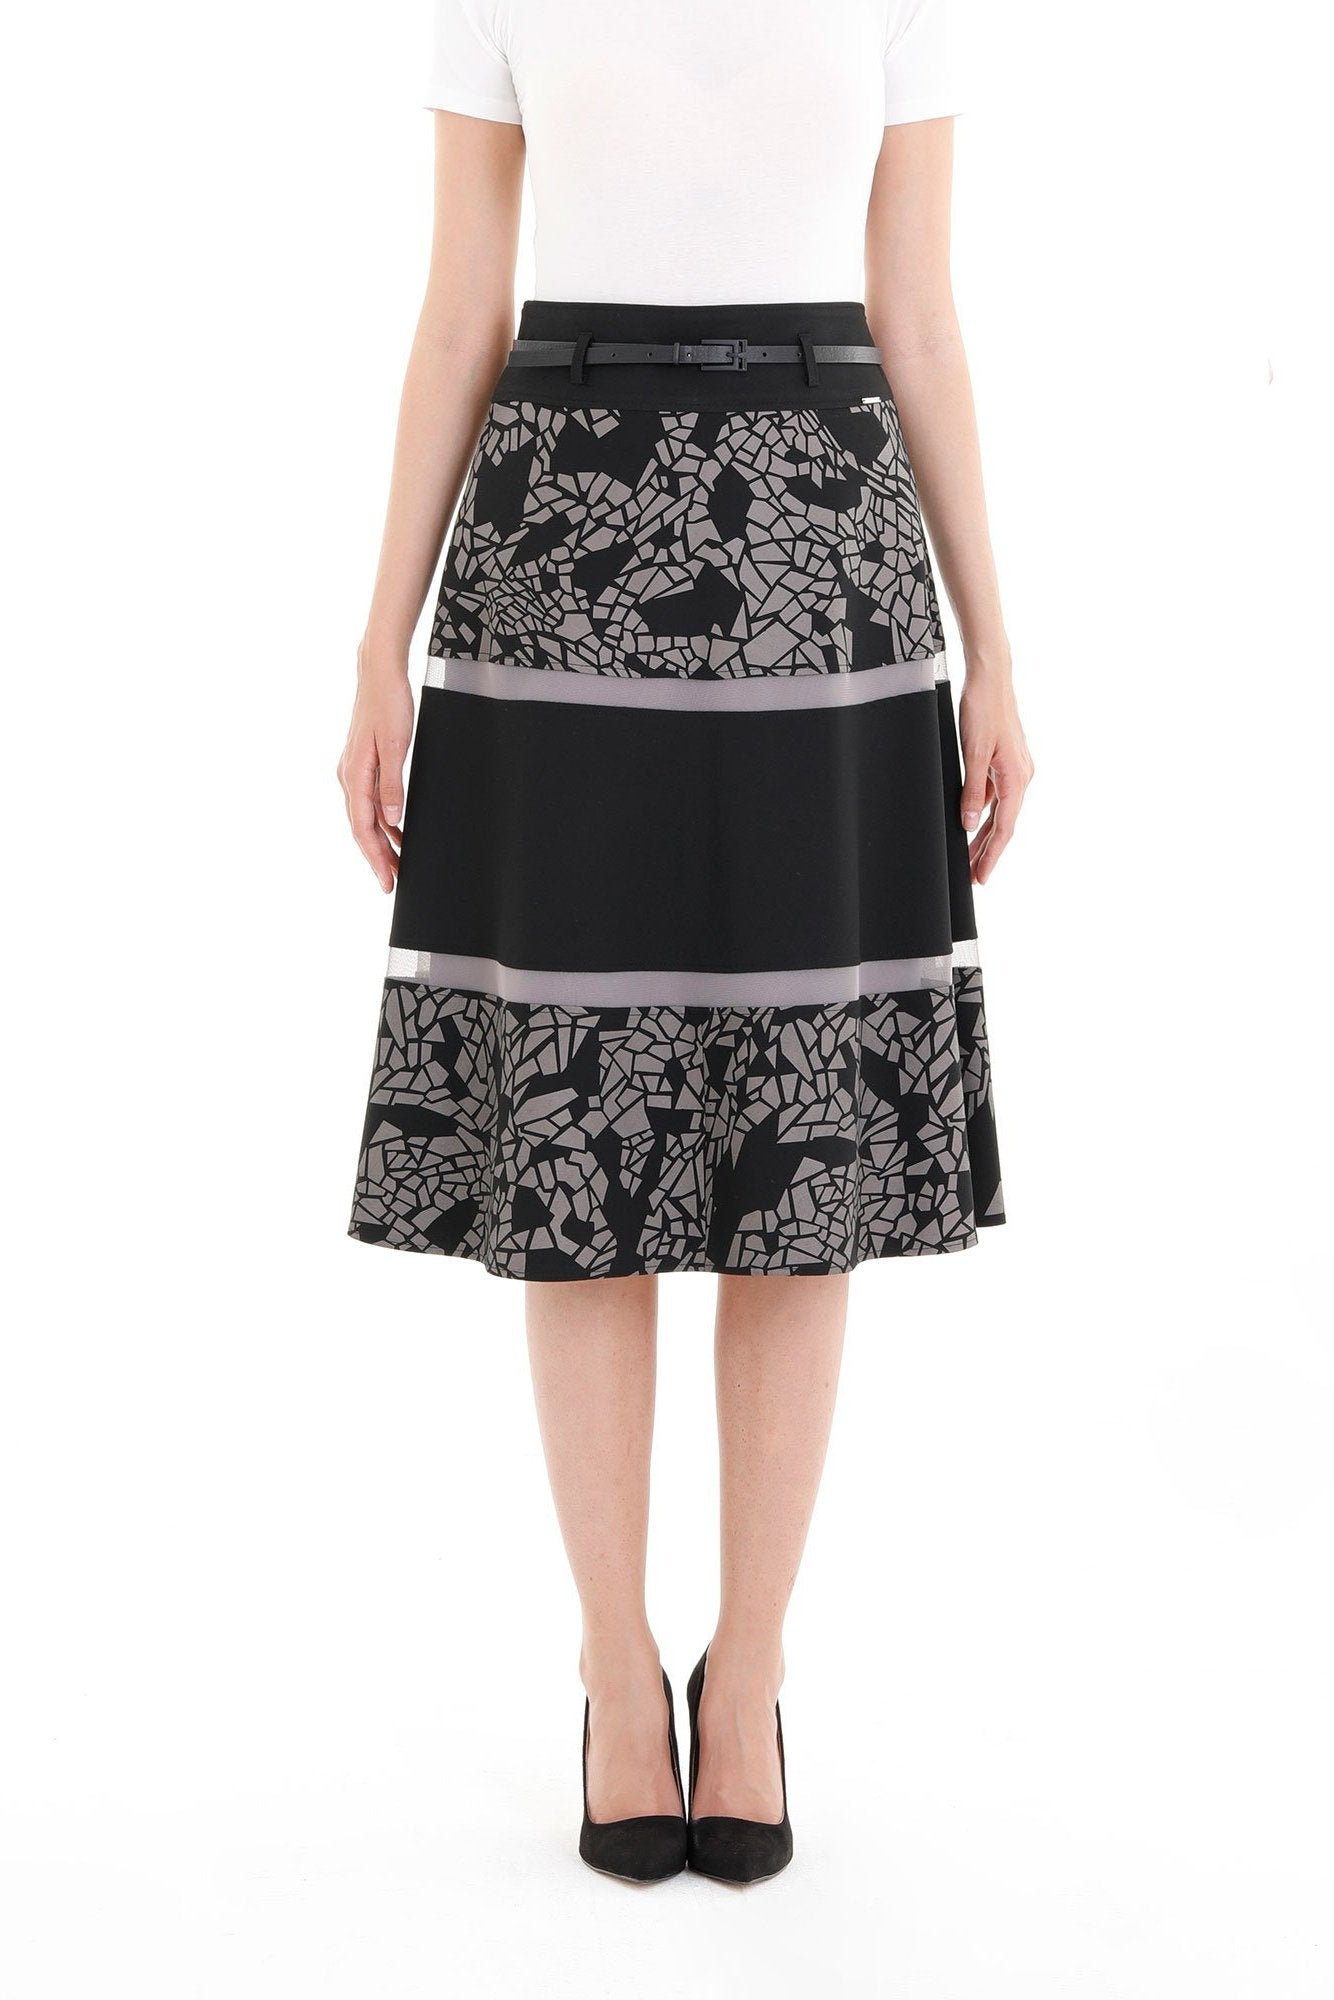 Guzella Women’s High Waist A-Line Pleated Woven Midi Skirt with Belt Loops (Black) Guzella